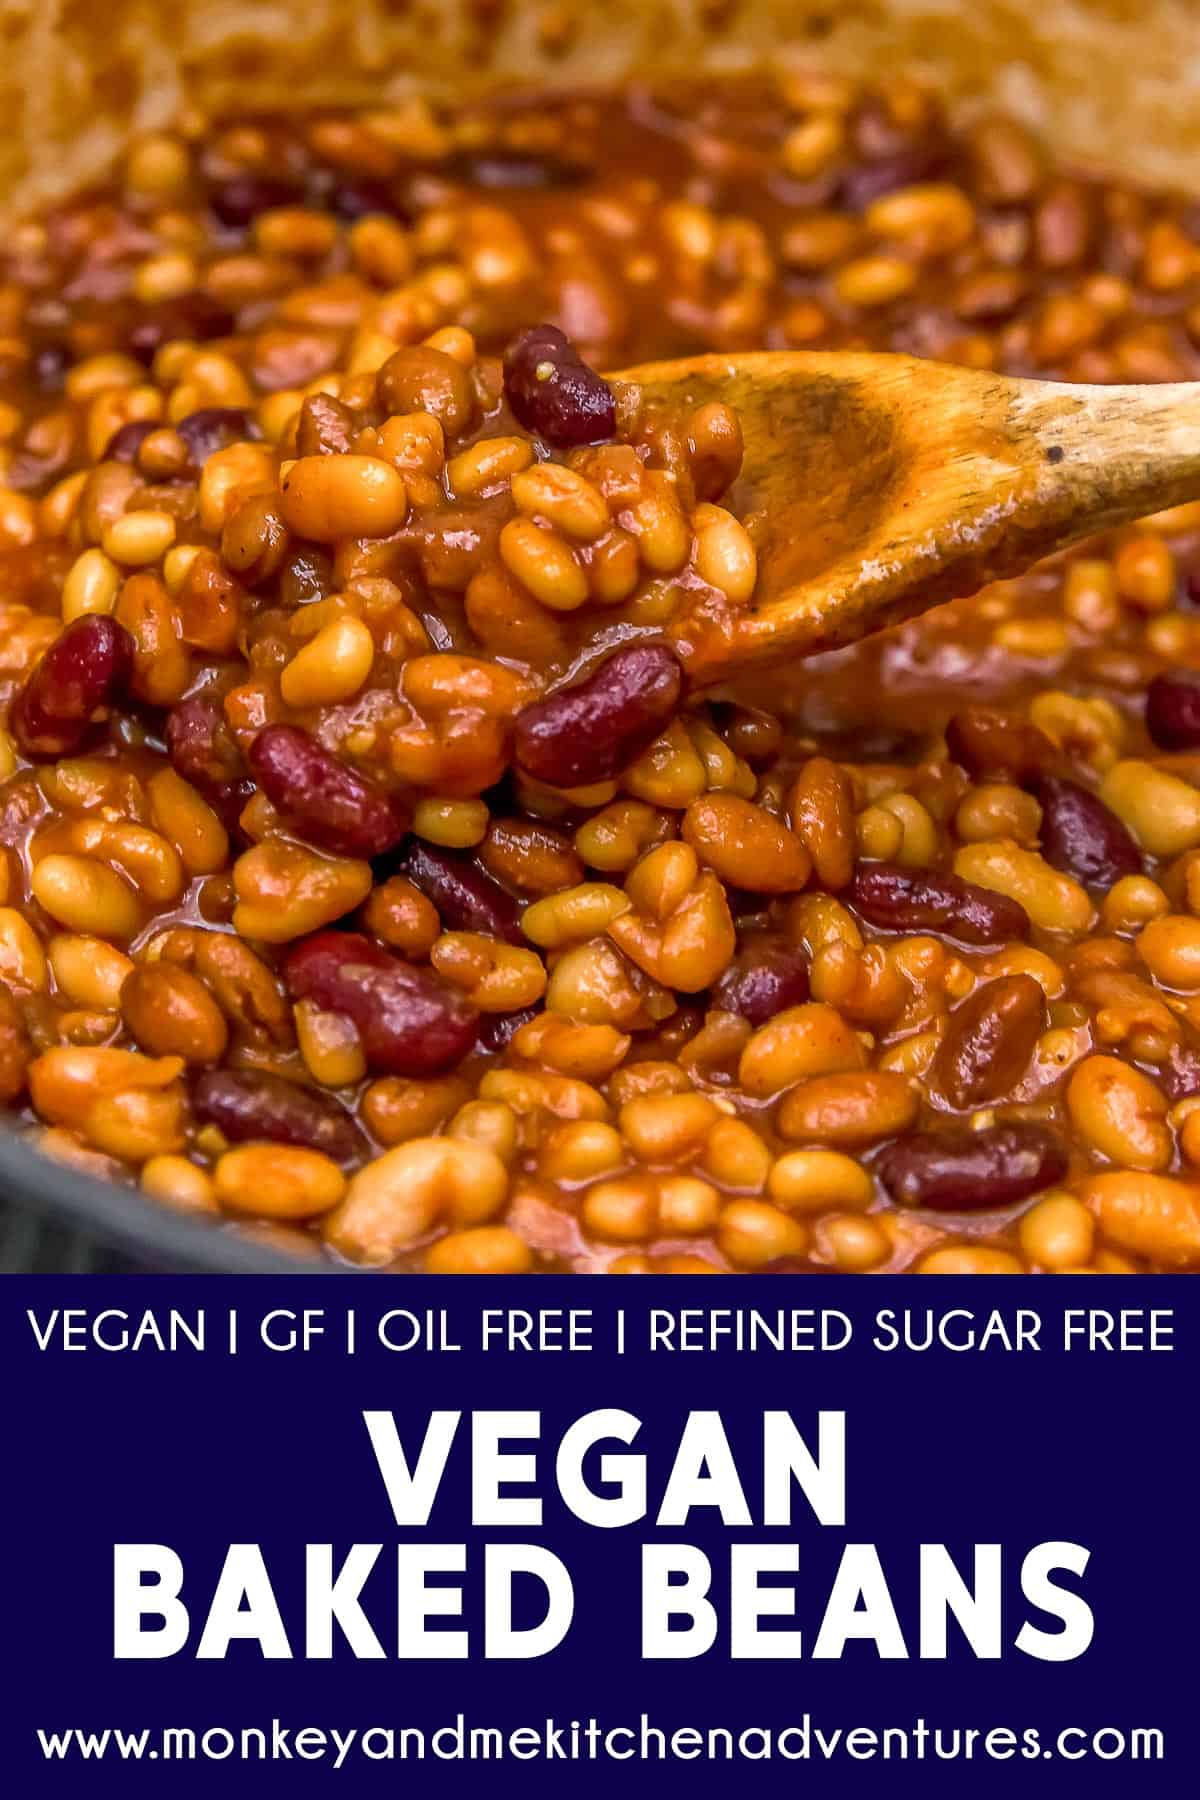 Vegan Baked Beans with Text Description